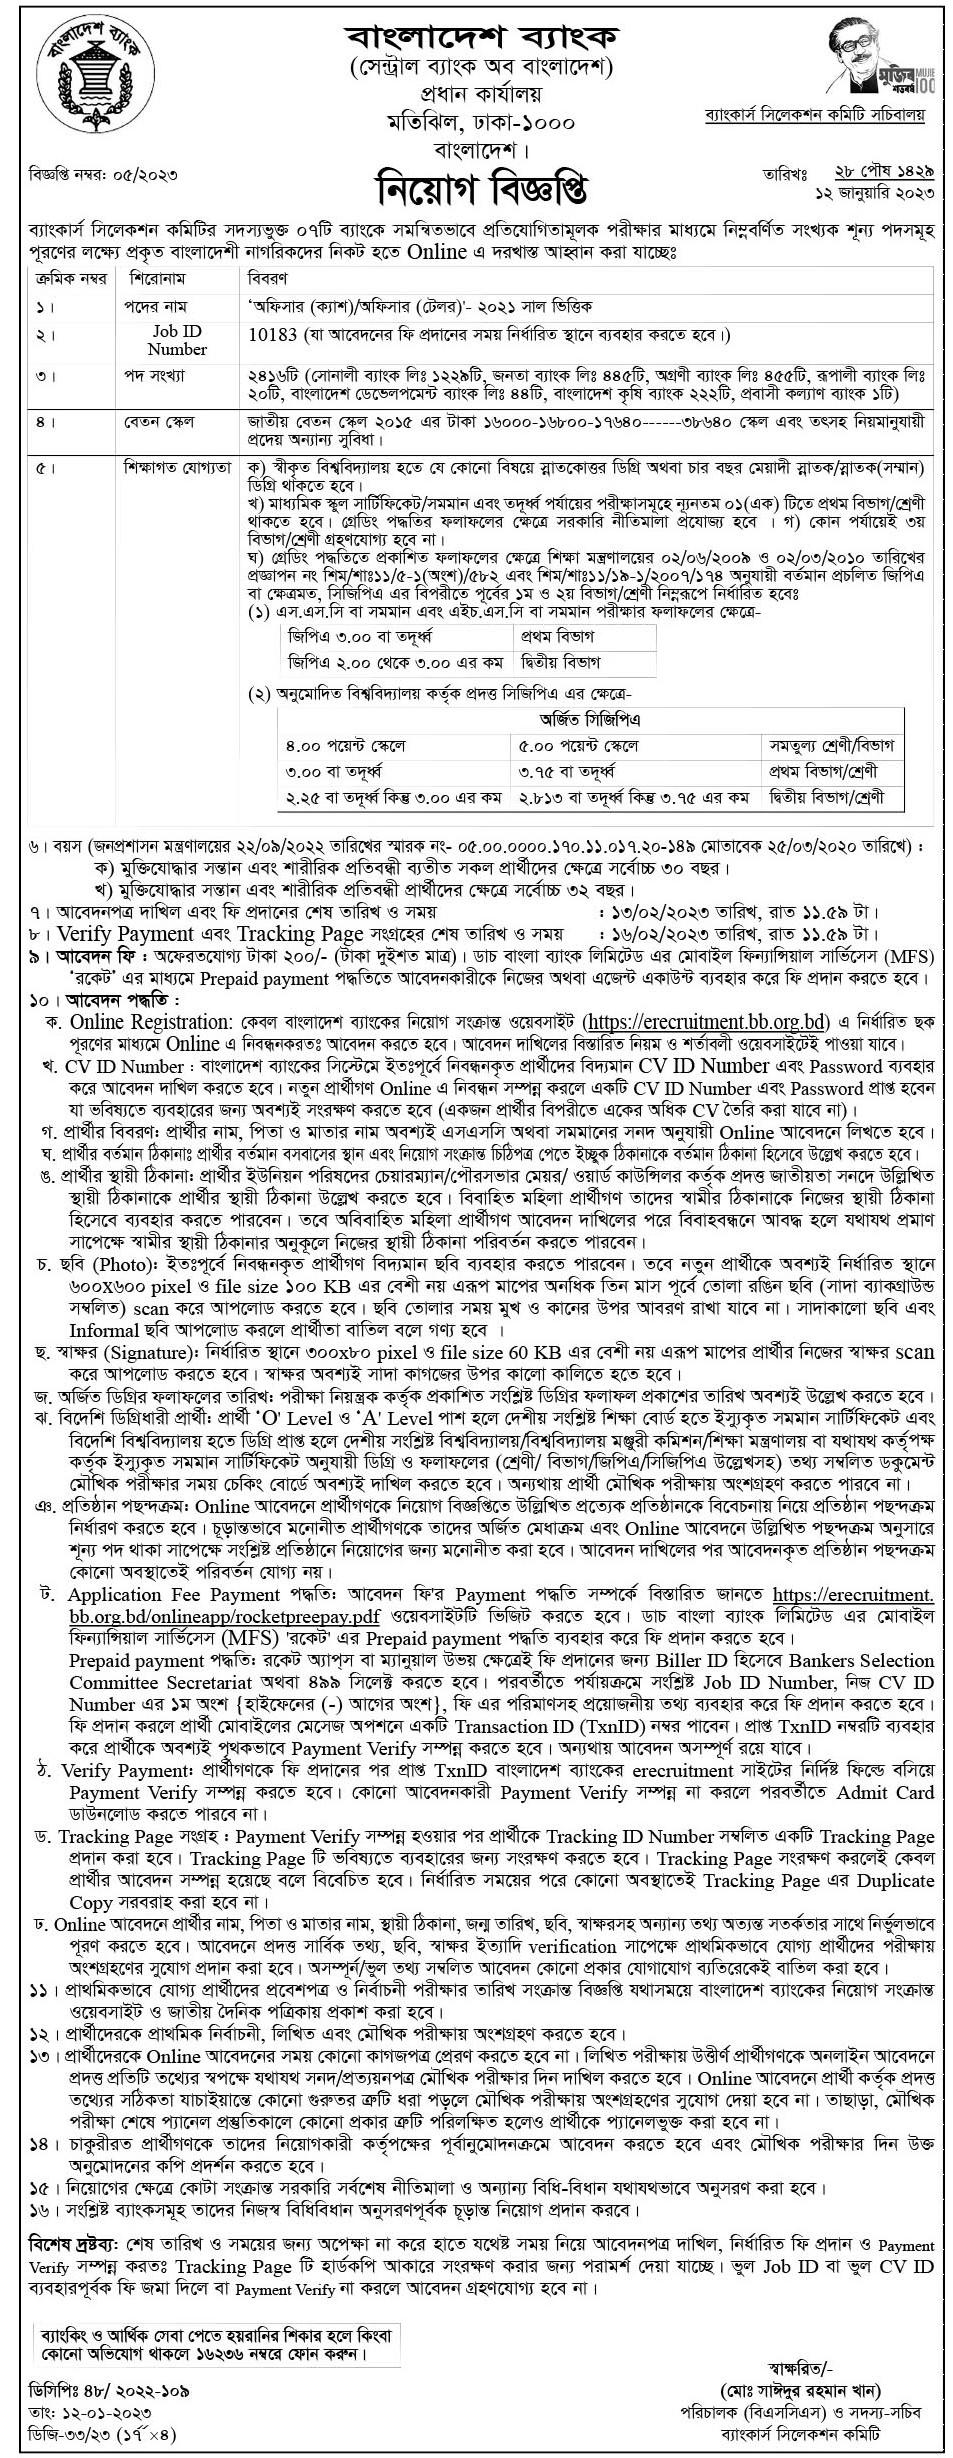 Sonali Bank Limited Job Circular 2023 www.sonalibank.com.bd